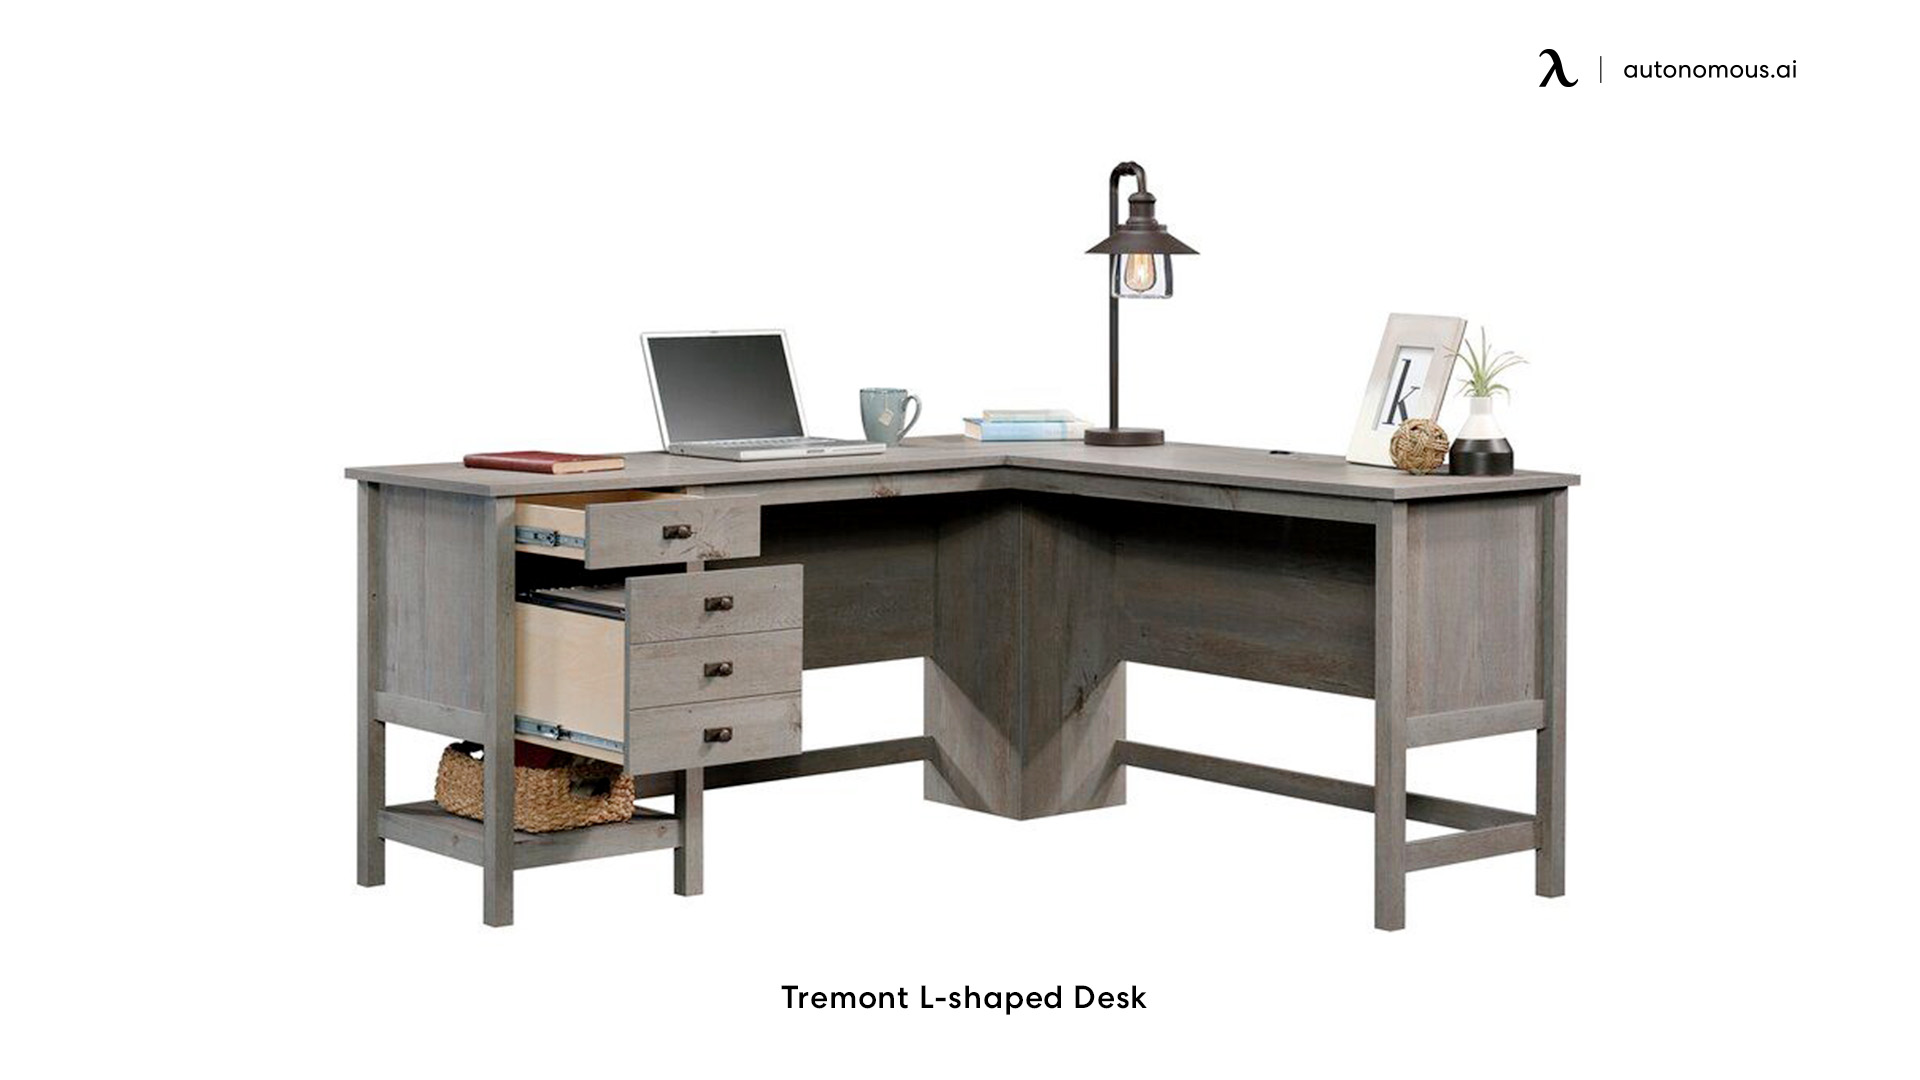 Tremont L-shaped commercial office desk